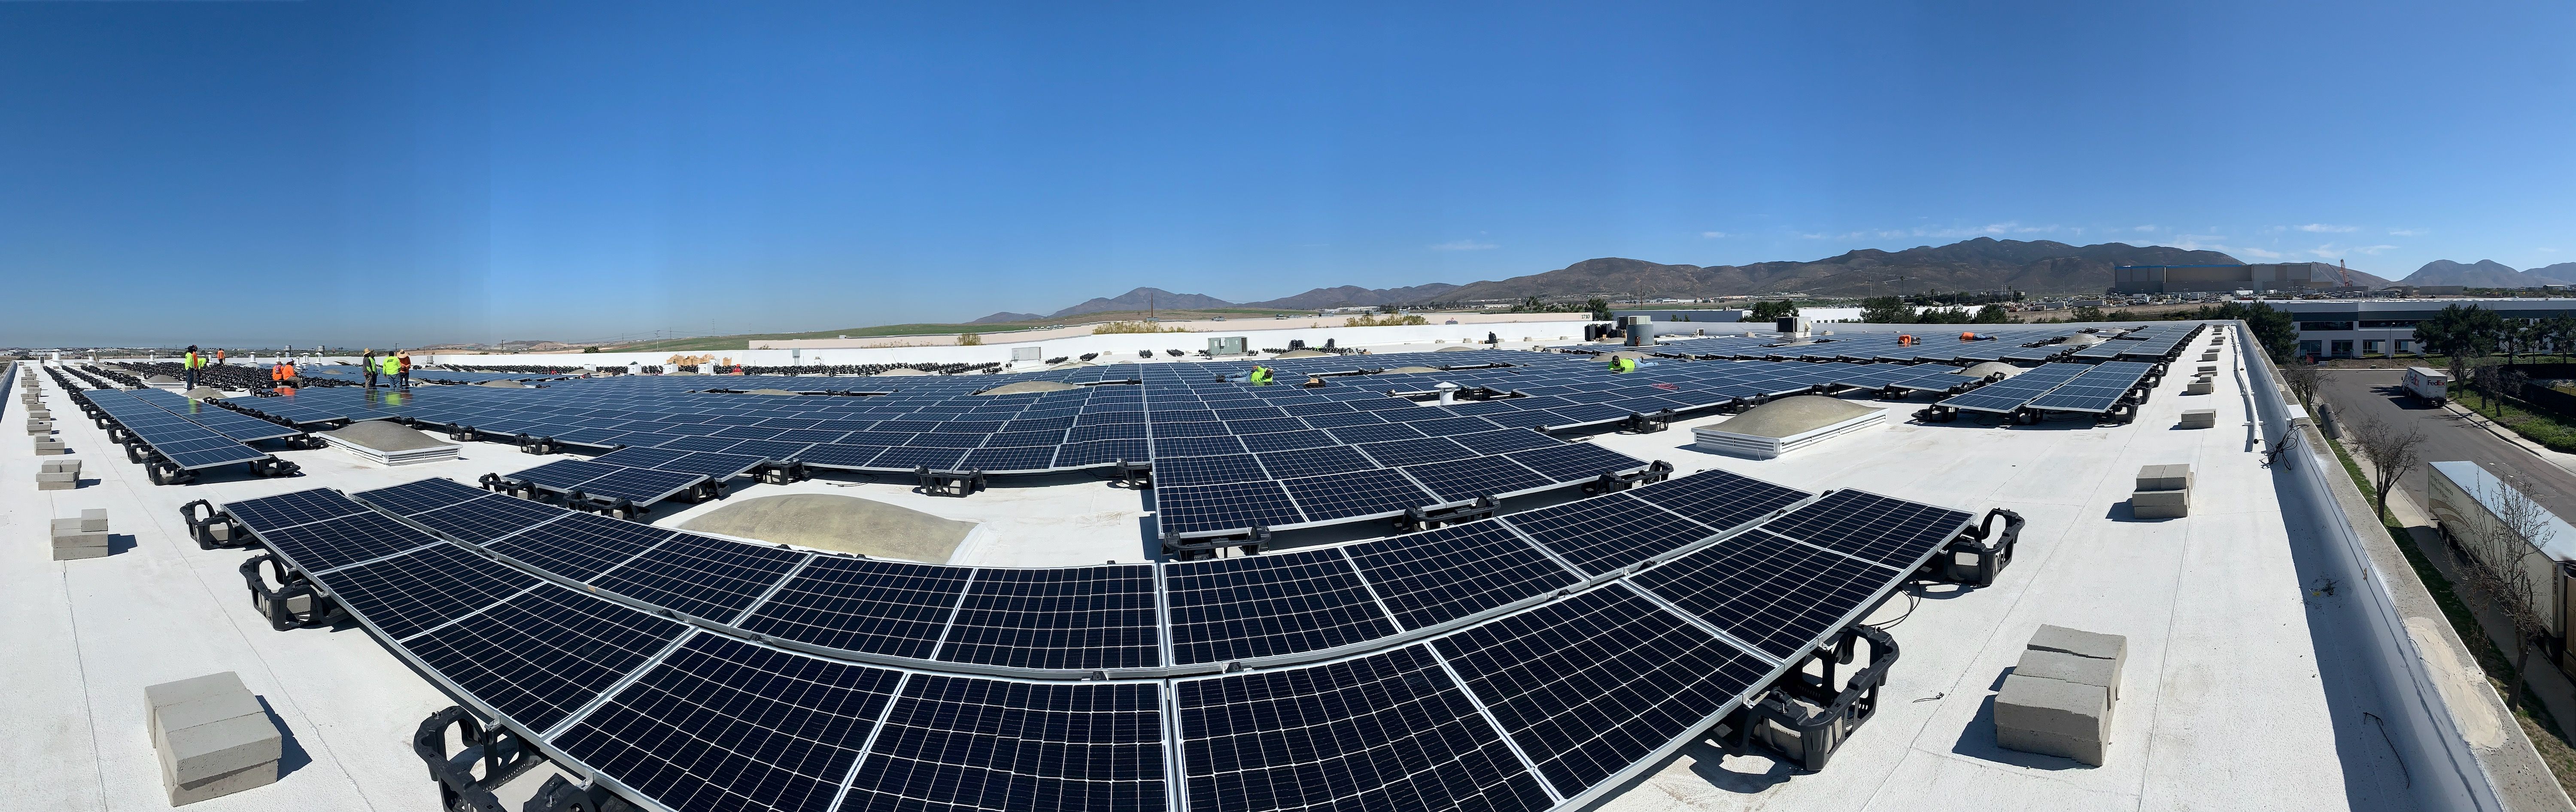 San Diego, San Diego County, California, Solar, renewable energy, solar photovoltaic, commercial solar pv